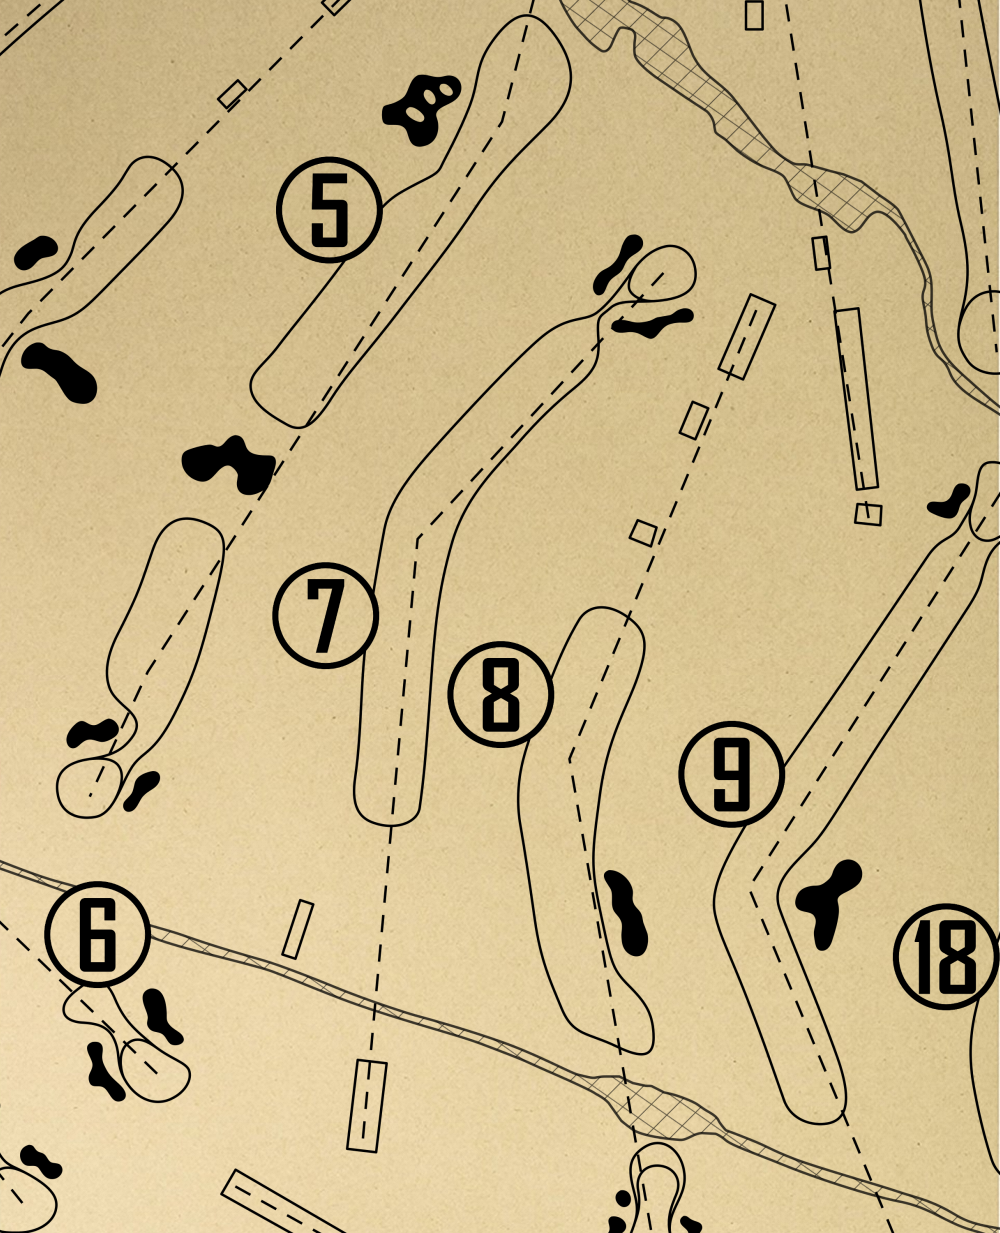 Medford Village Country Club Outline (Print)